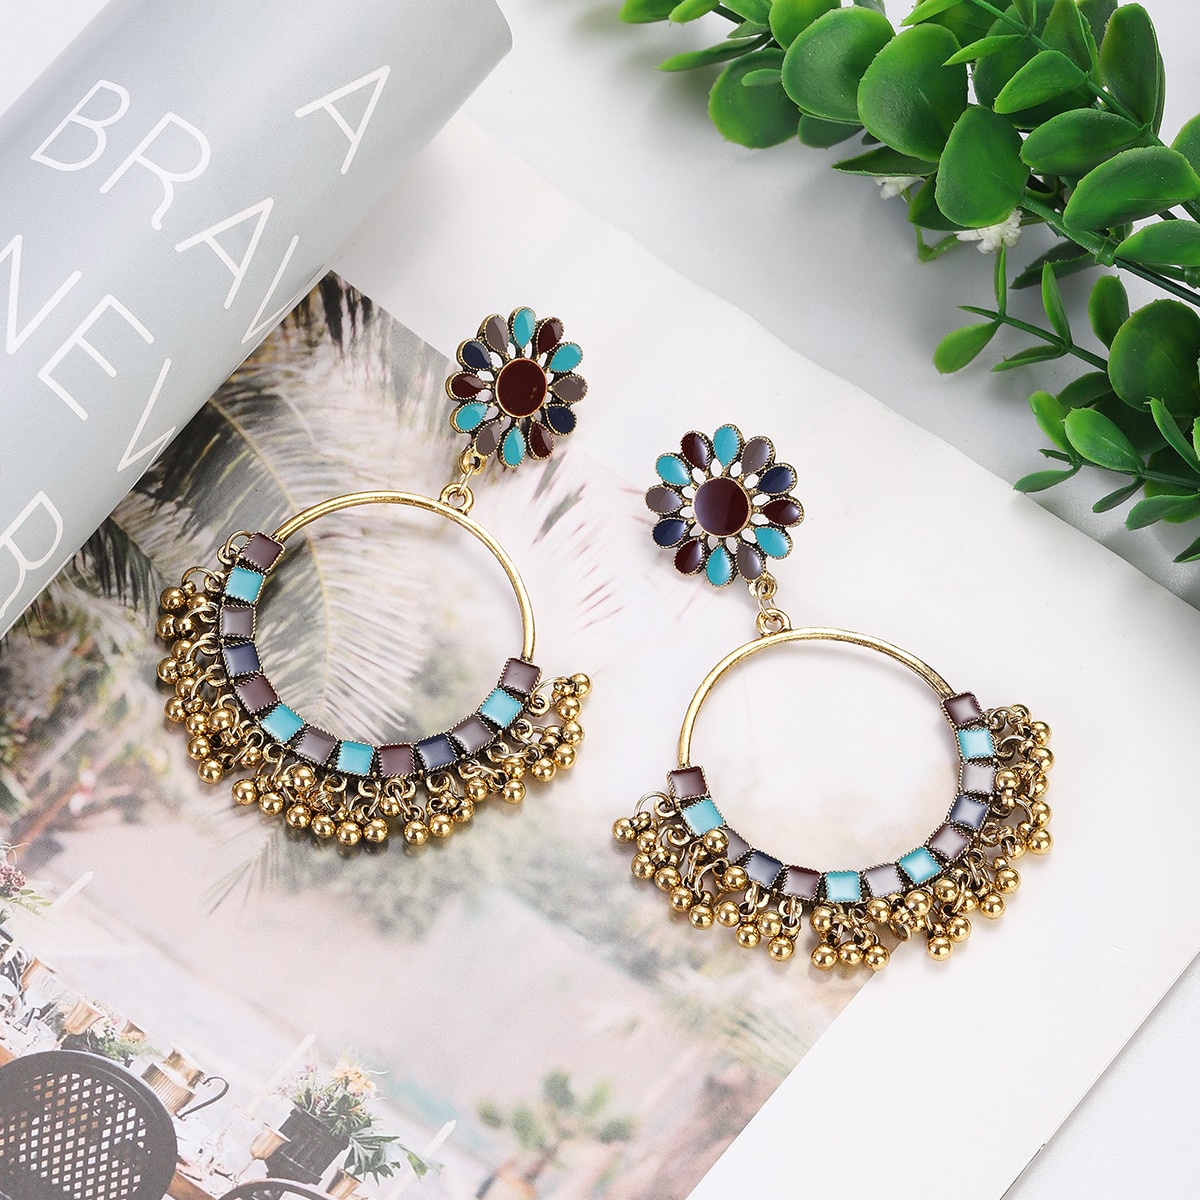 Ethnic-Vintage-Big-Round-Dangle-Earrings-for-Women-Boho-Green-Flower-Beads-Tassel-Earrings-Party-Jew-1005005057264367-6